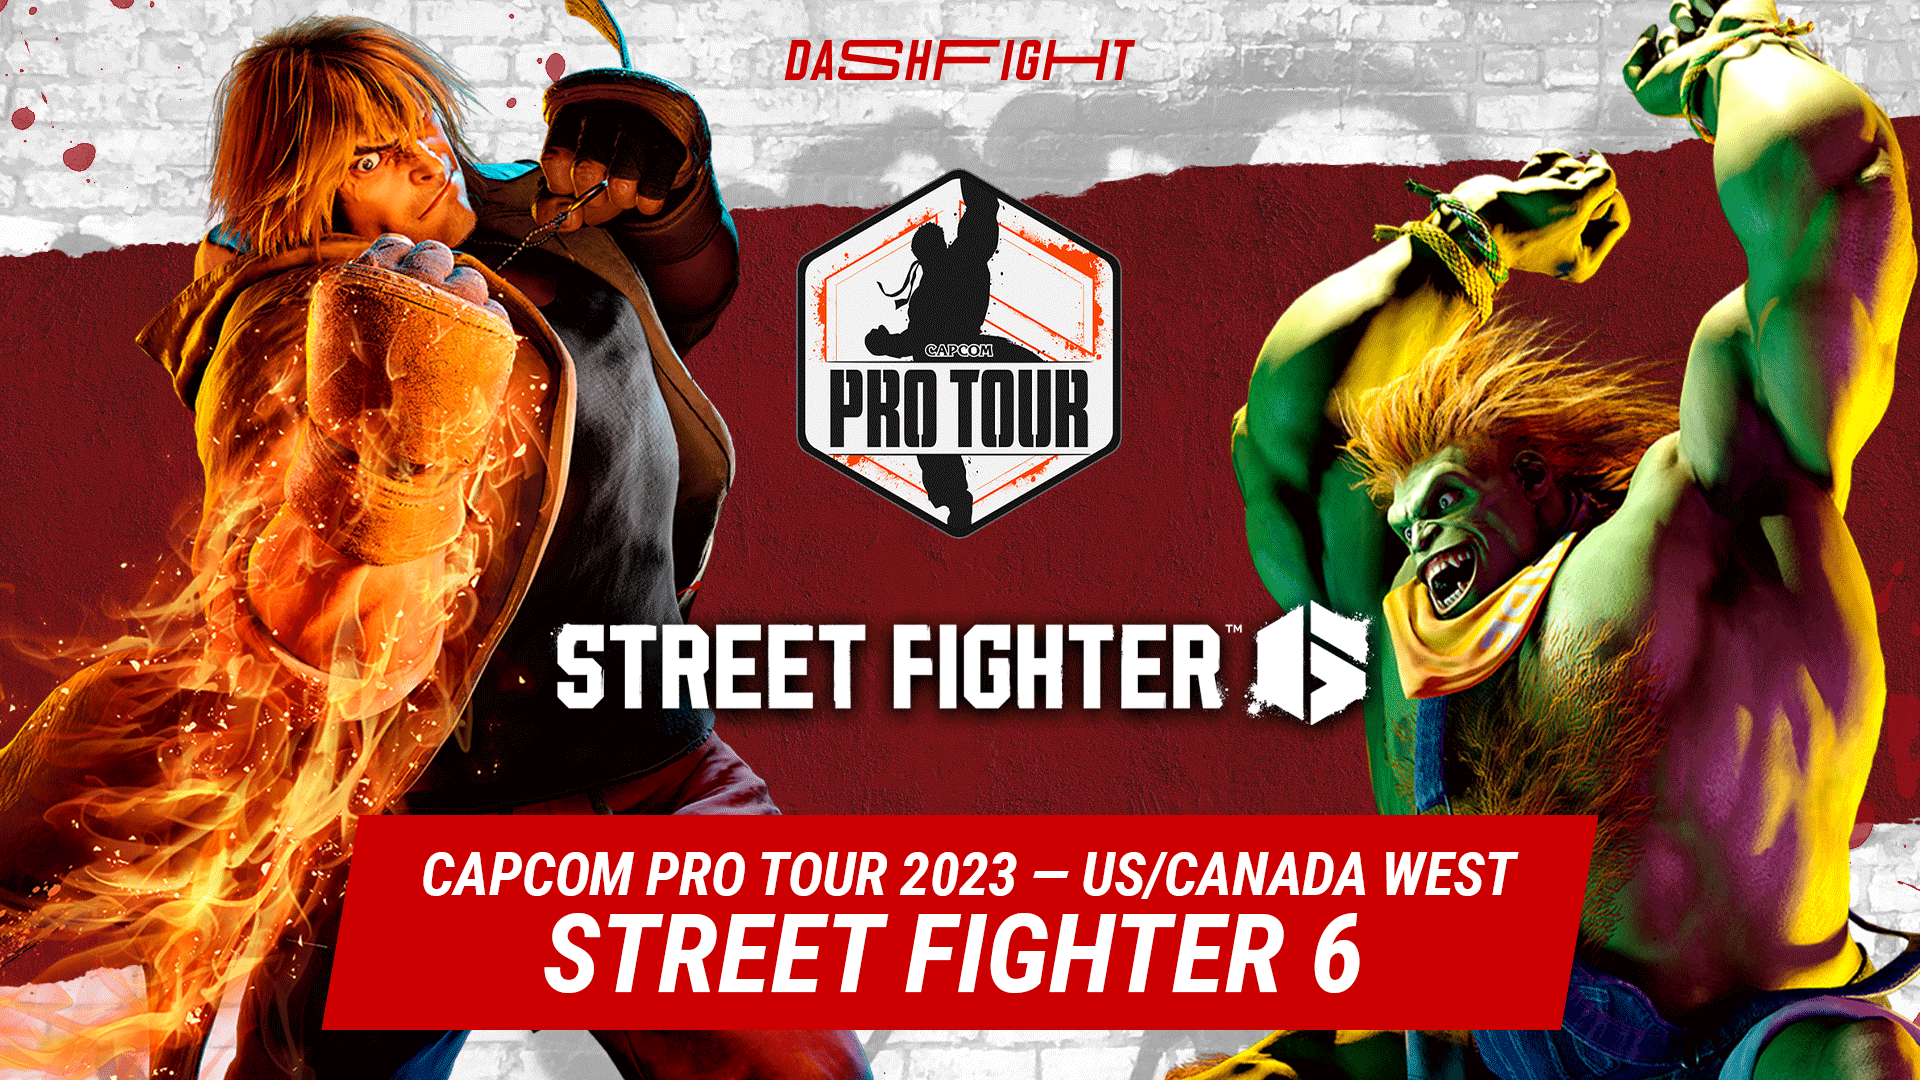 Capcom Pro Tour - The Home of Street Fighter Esports